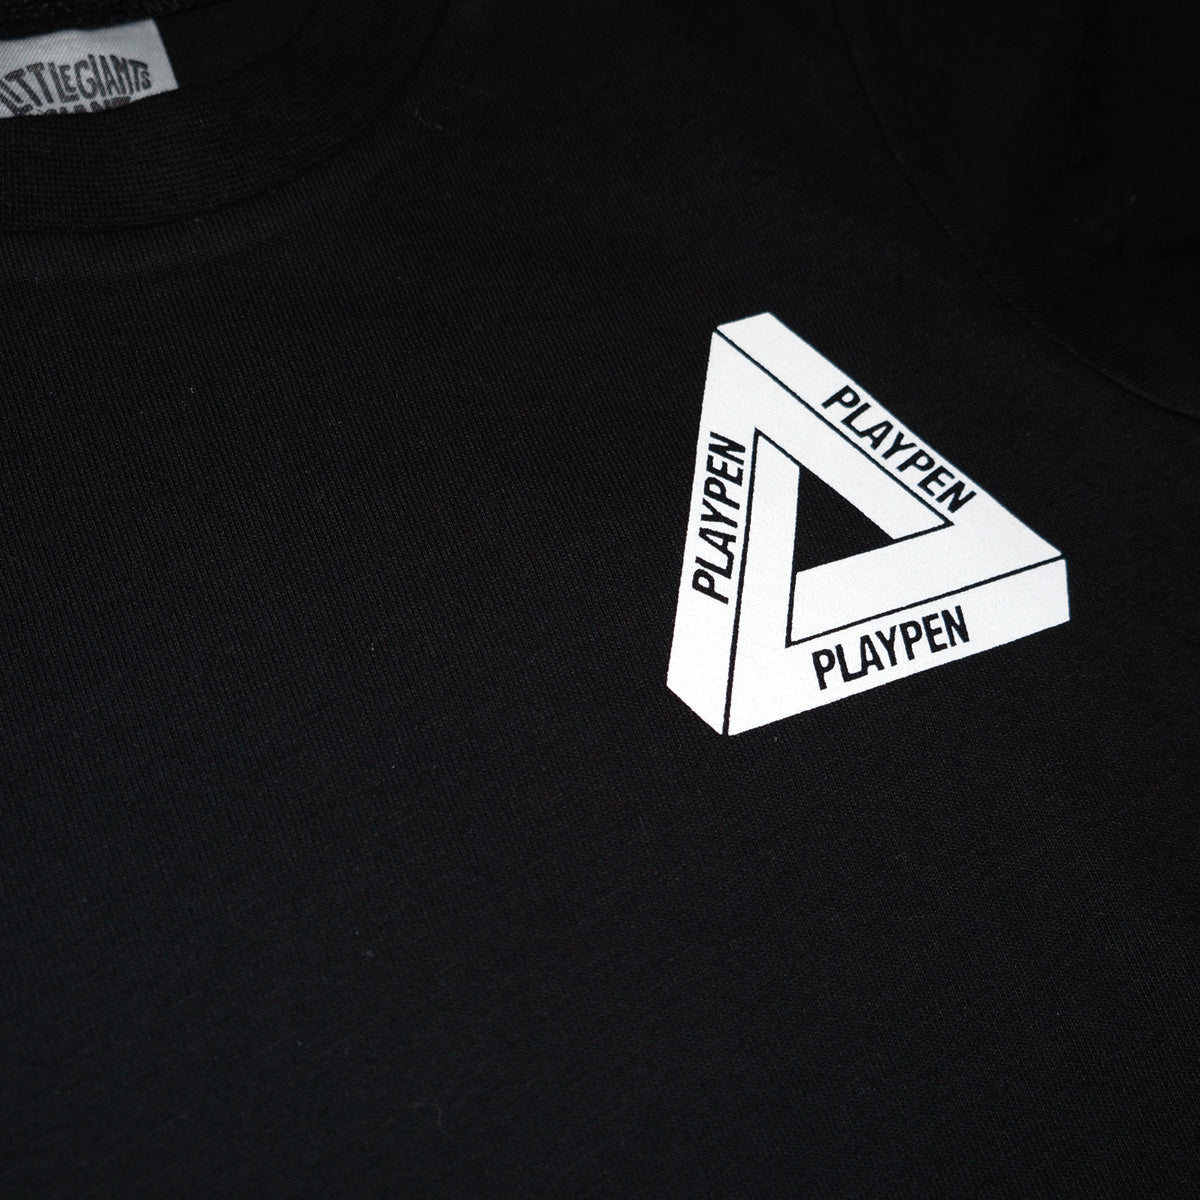 Playpen T-Shirt (Black)